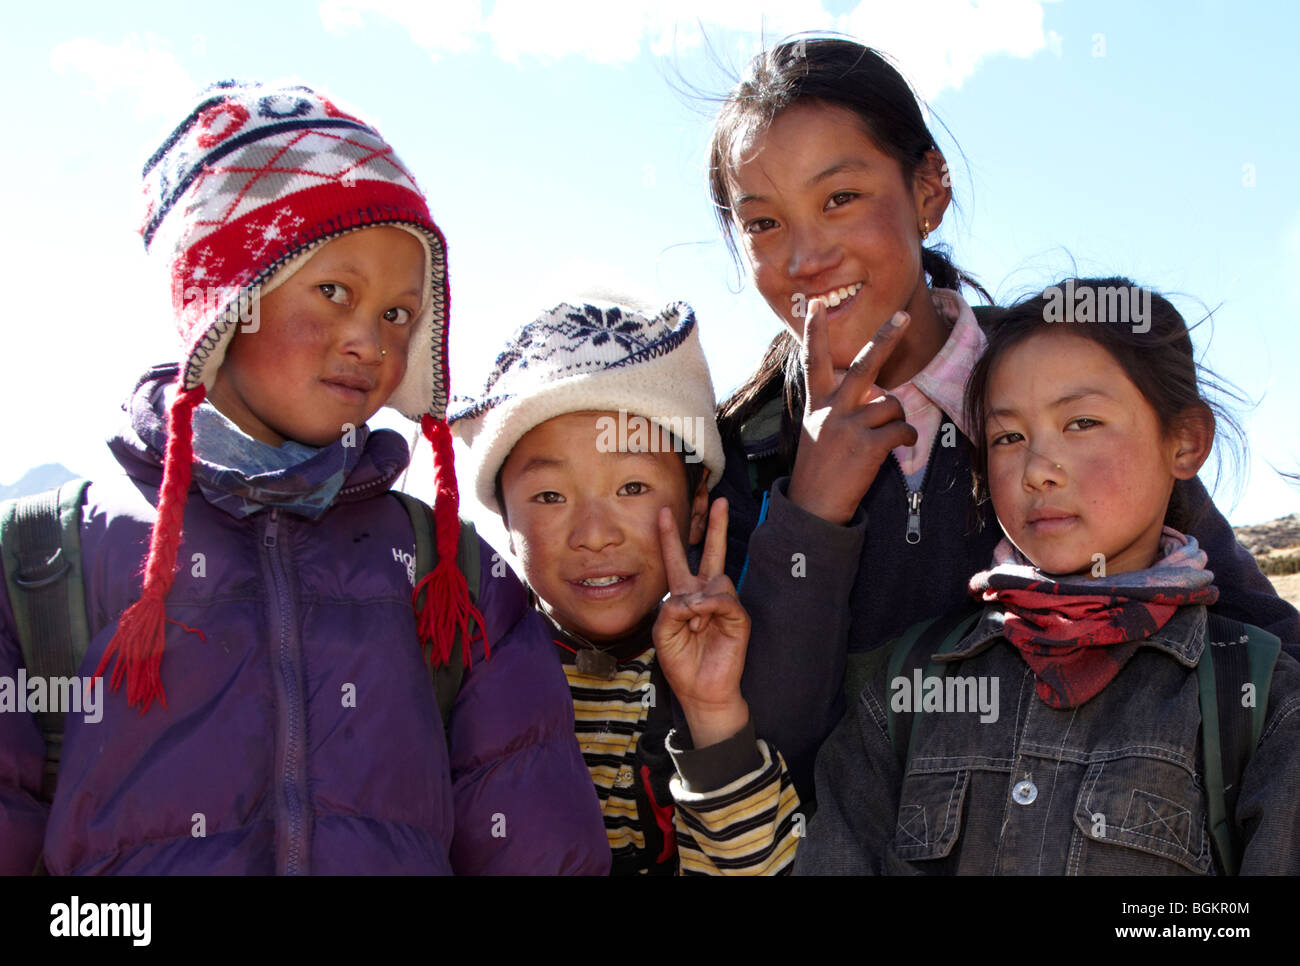 Jungen Sherpa-Kinder In der Everest Region Himalaya Nepal Asien Stockfoto